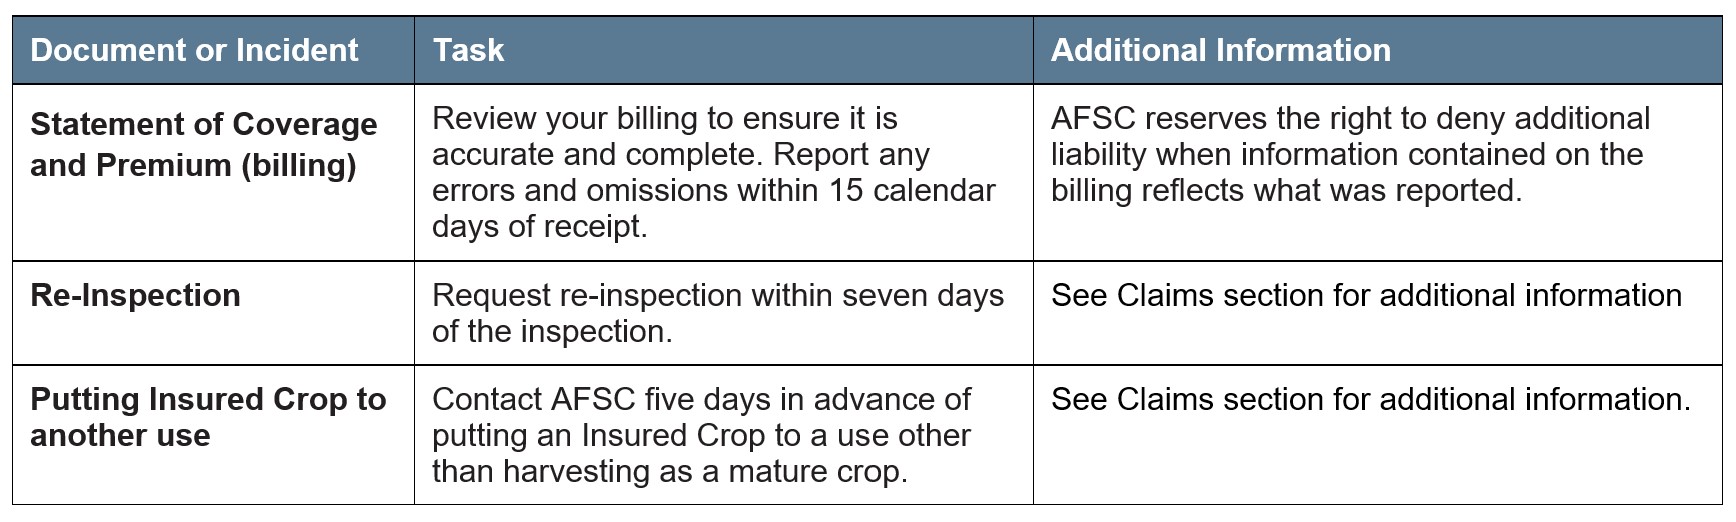 Pedigreed Hybrid Canola Article 4 Other Deadlines. Call AFSC for details